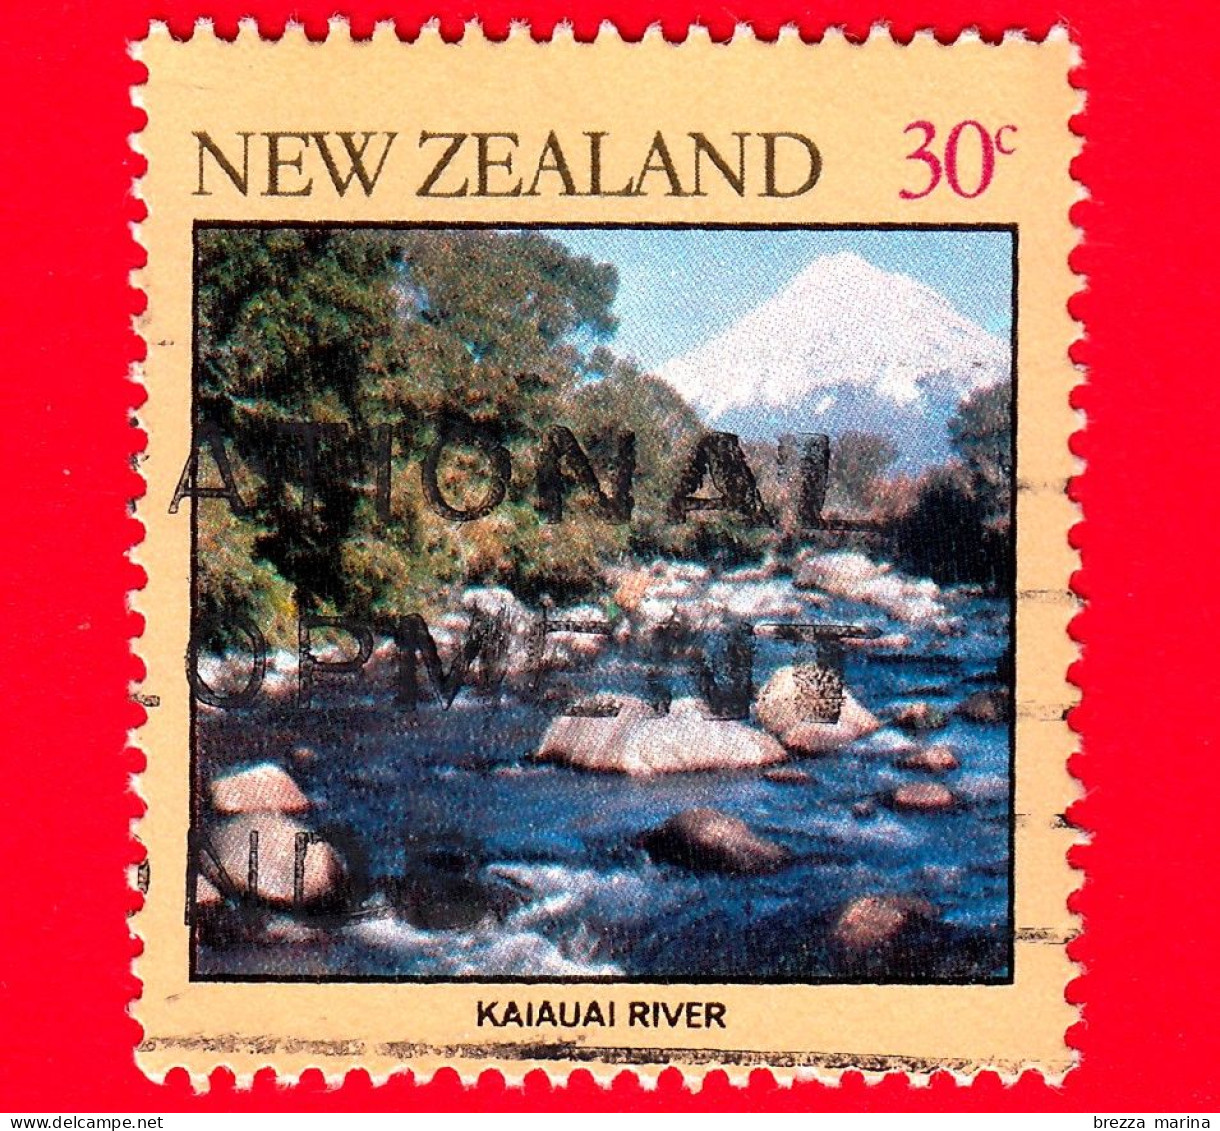 NUOVA ZELANDA - Usato - 1981 - Fiumi - Paesaggi - Fiume Kaiauai - River - 30 - Used Stamps